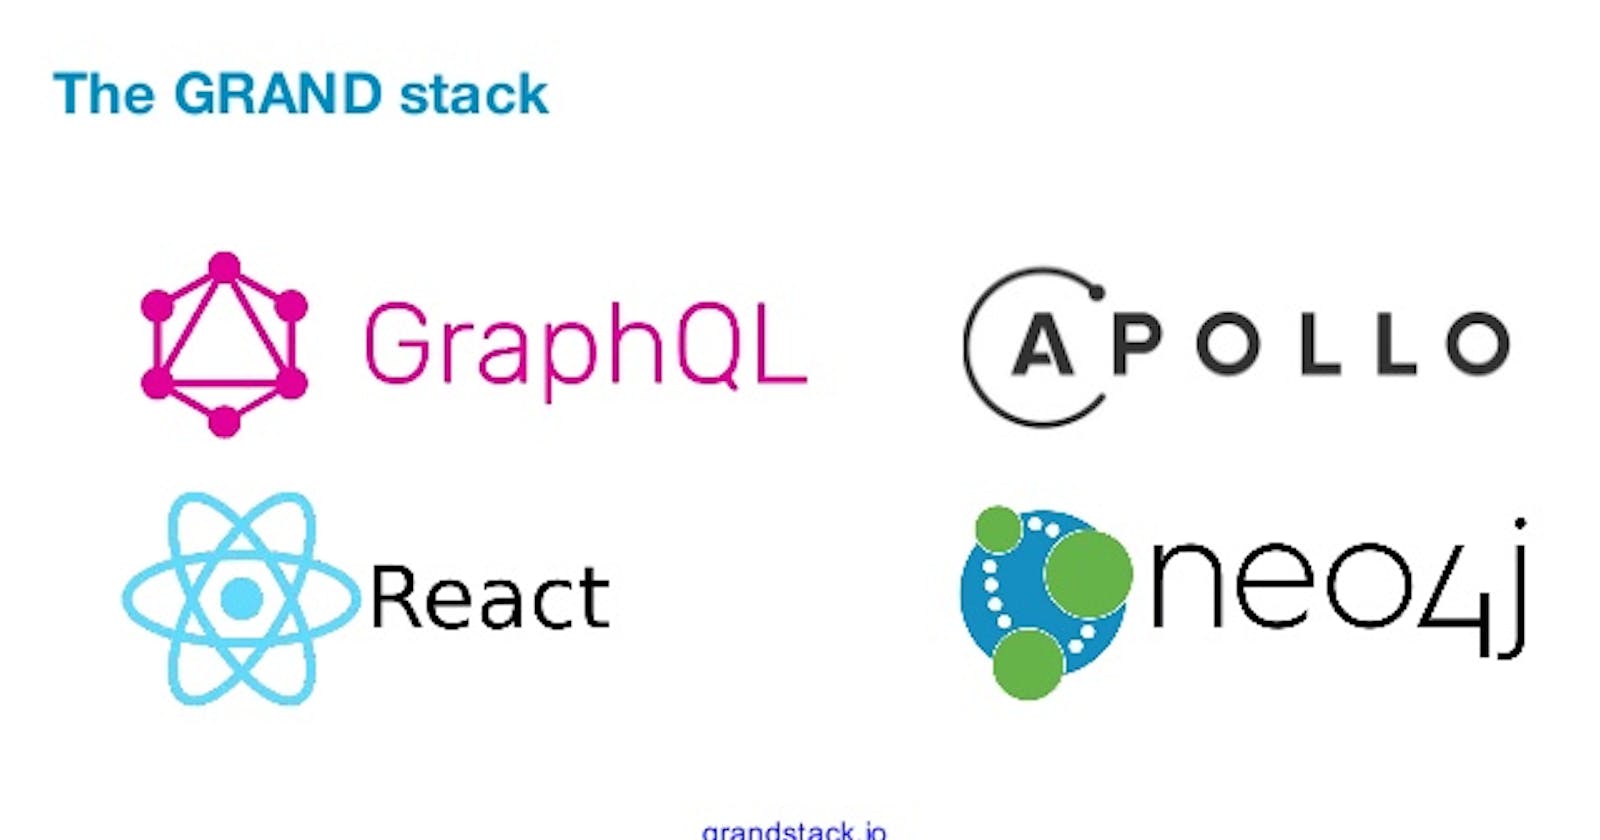 6. Full-stack GraphQL application using GRAND stack